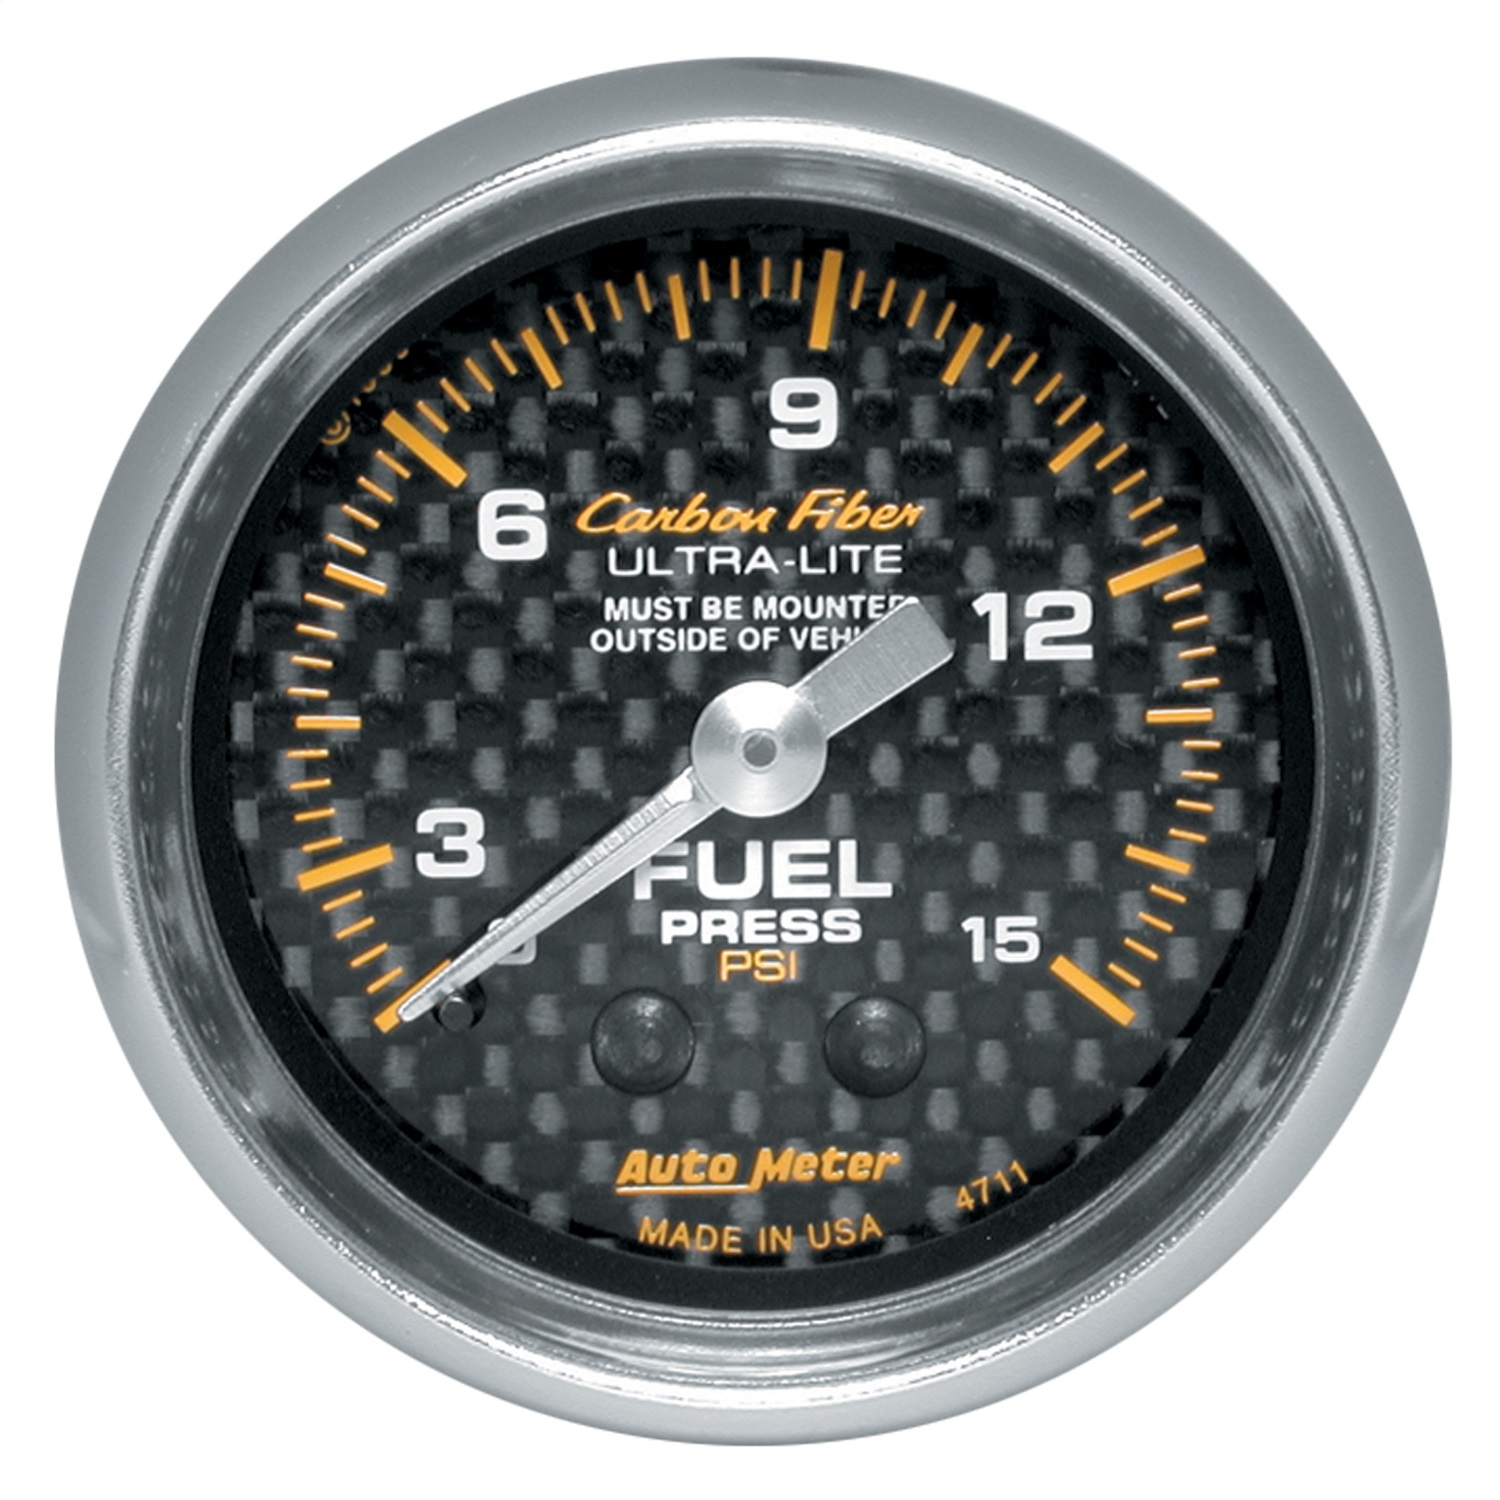 Auto Meter Auto Meter 4711 Carbon Fiber; Mechanical Fuel Pressure Gauge